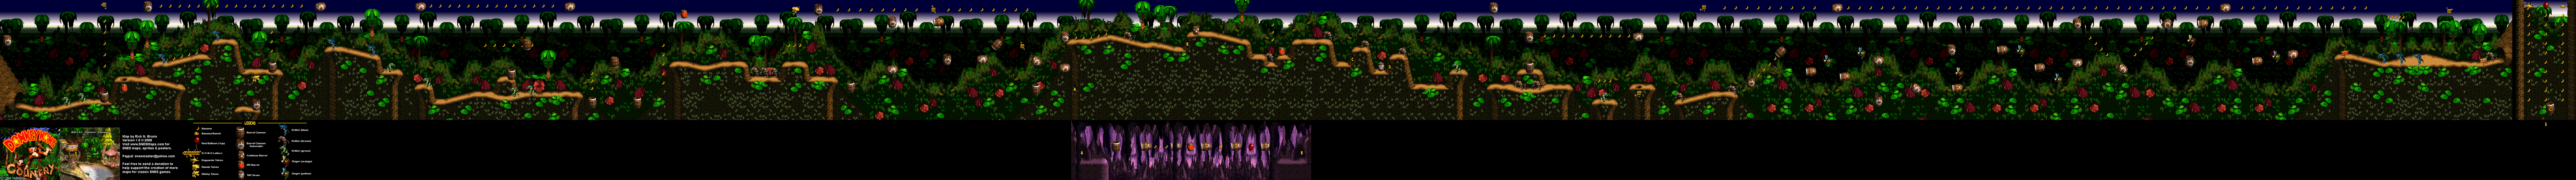 Donkey Kong Country - Level 5 - Barrel Cannon Canyon - Super Nintendo SNES Map